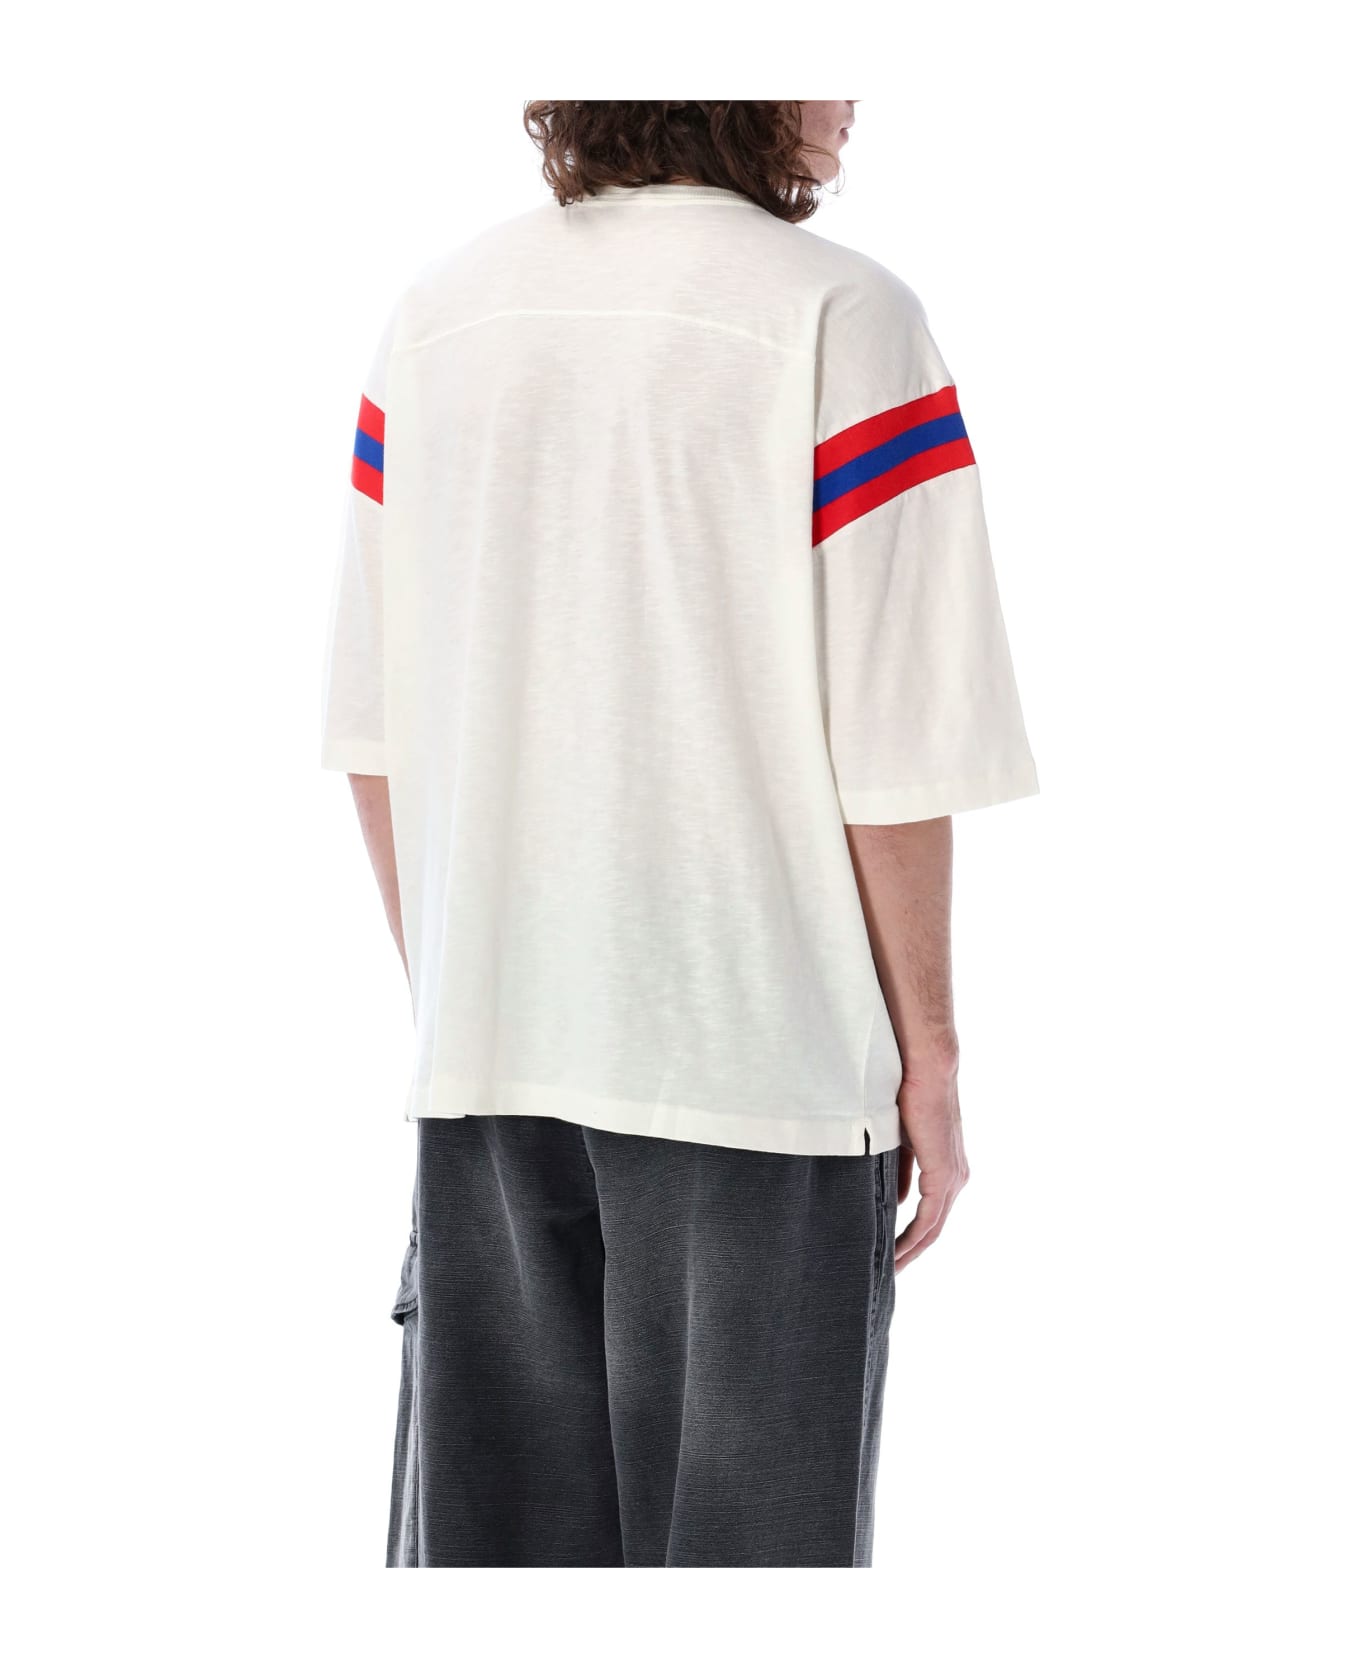 YMC Skate T-shirt - WHITE/ORANGE/BLUE シャツ